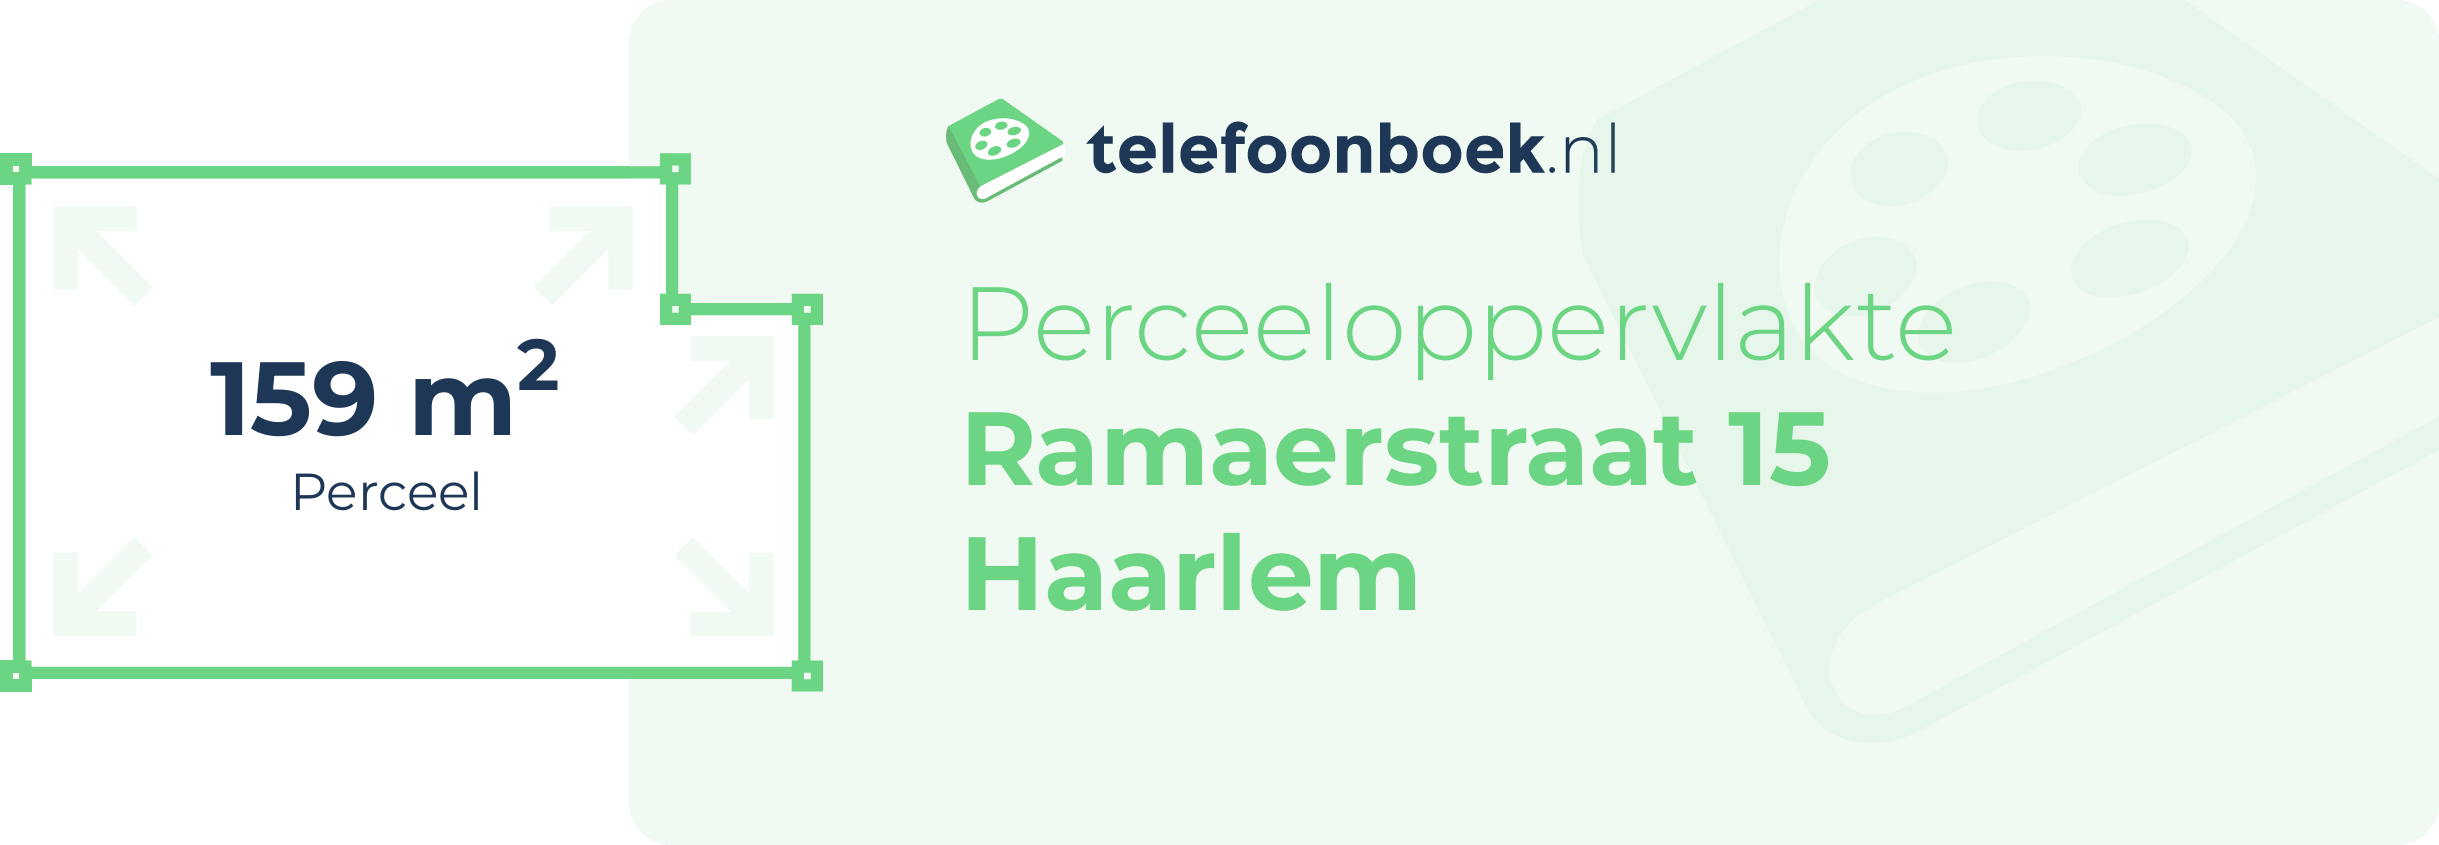 Perceeloppervlakte Ramaerstraat 15 Haarlem